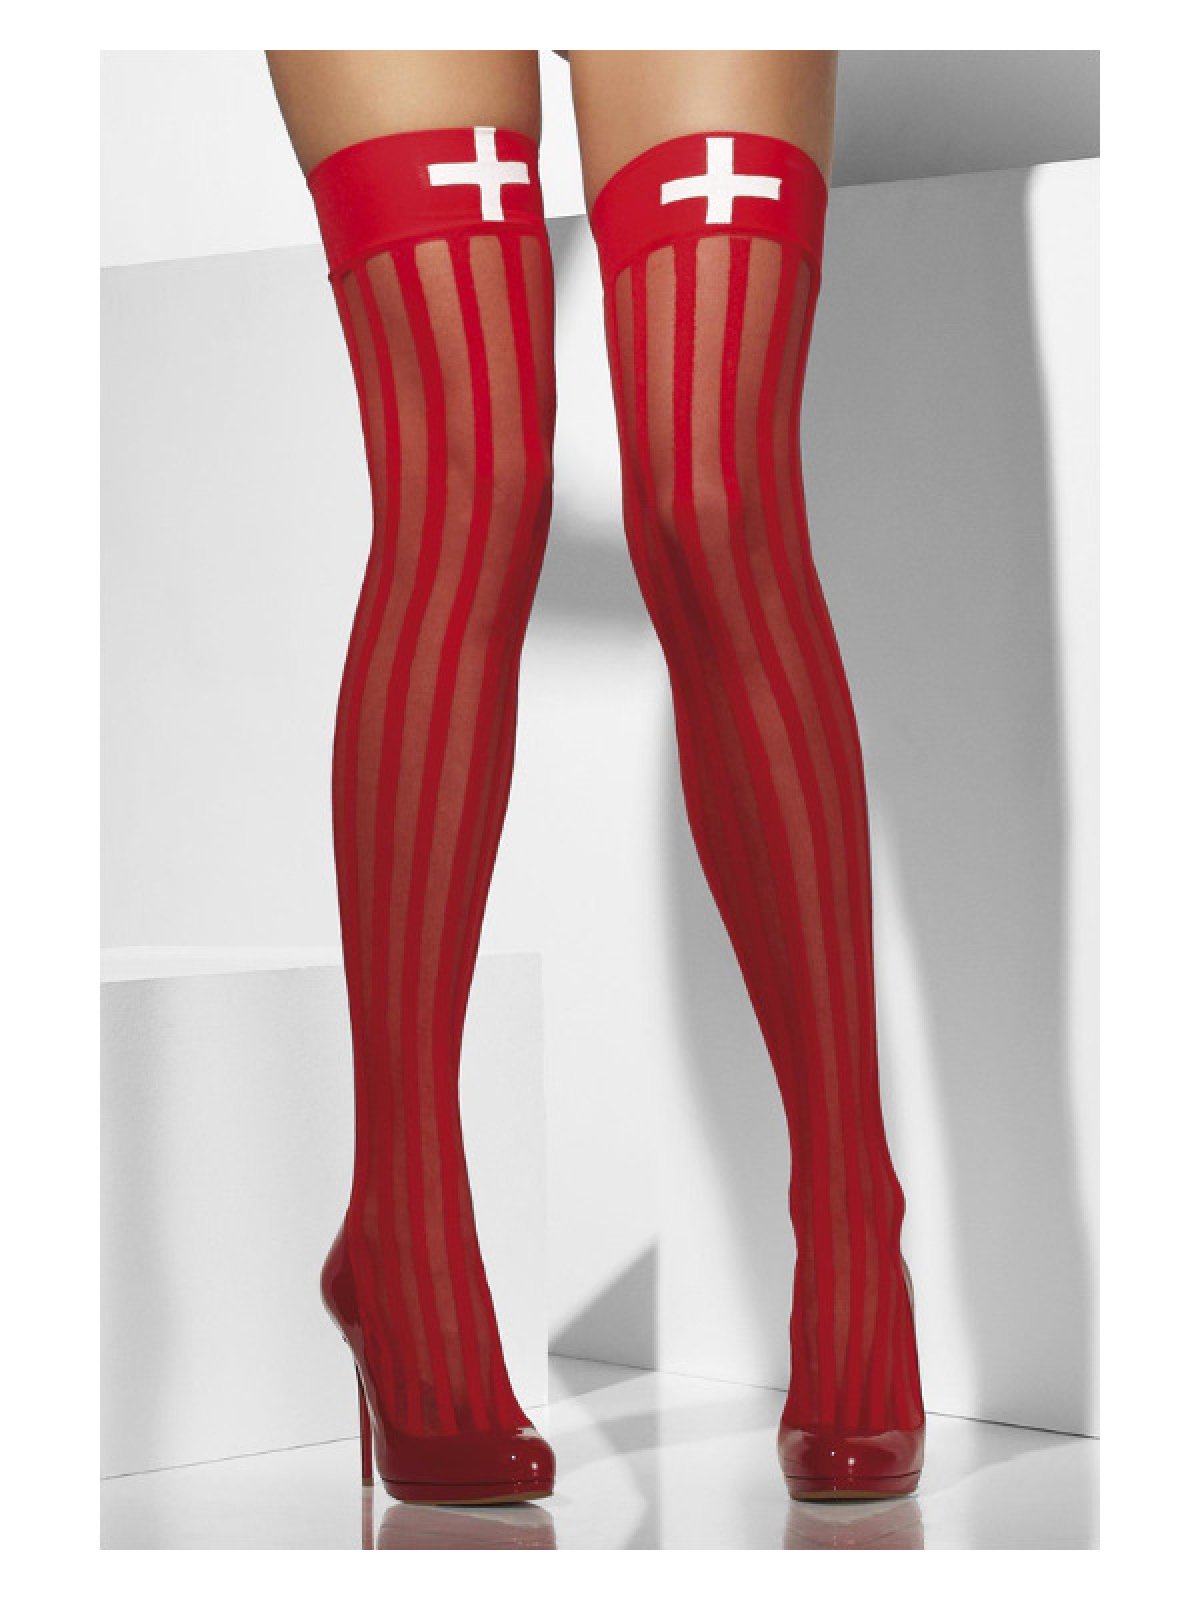 secrets in lace melissa rht stripped stockings